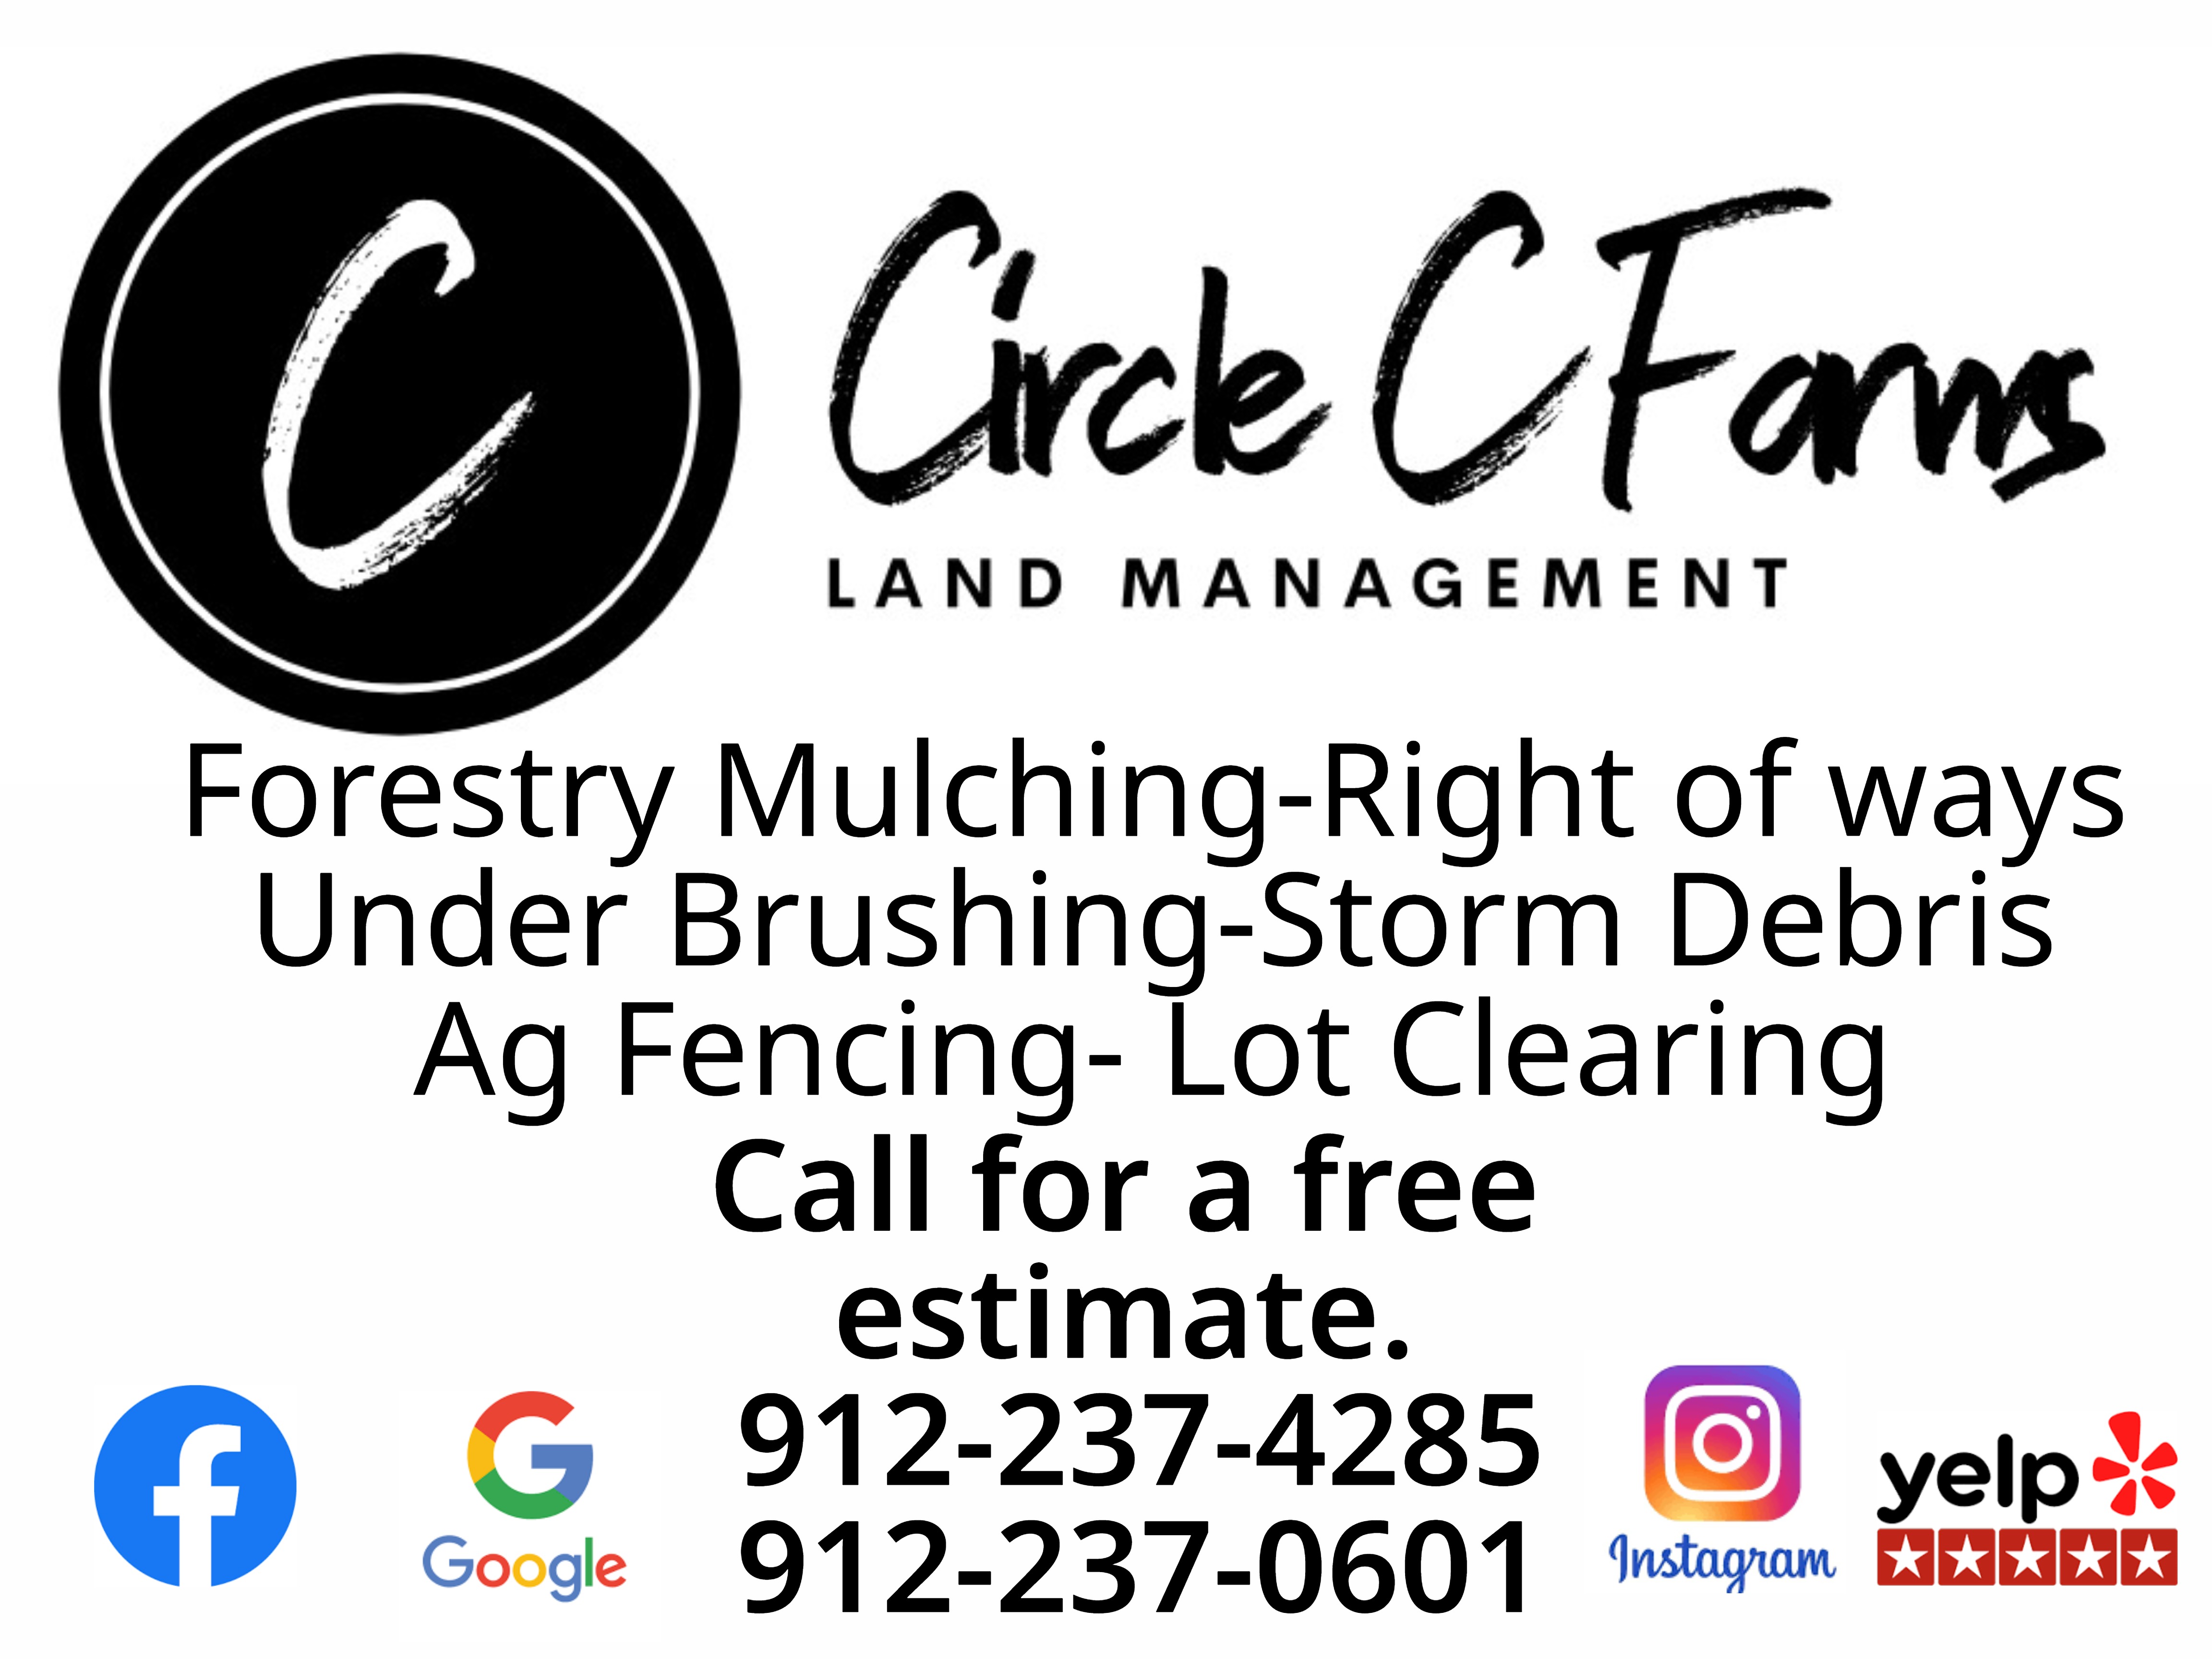 Circle C Farms Land Management Logo